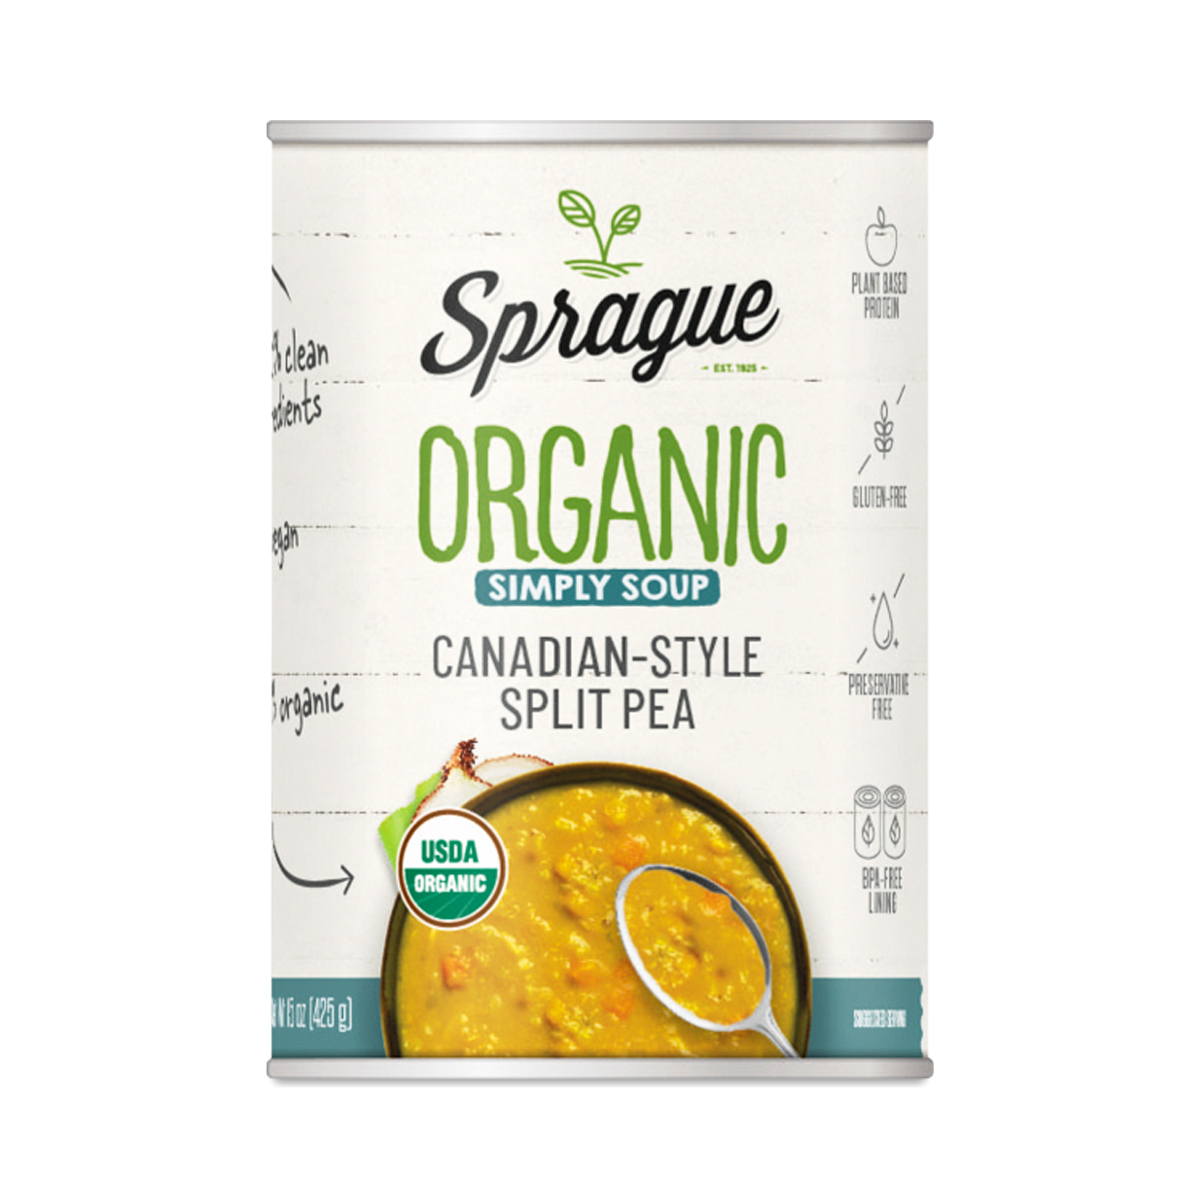 Sprague Organic Quebec-Style Split Pea Soup 15 oz can